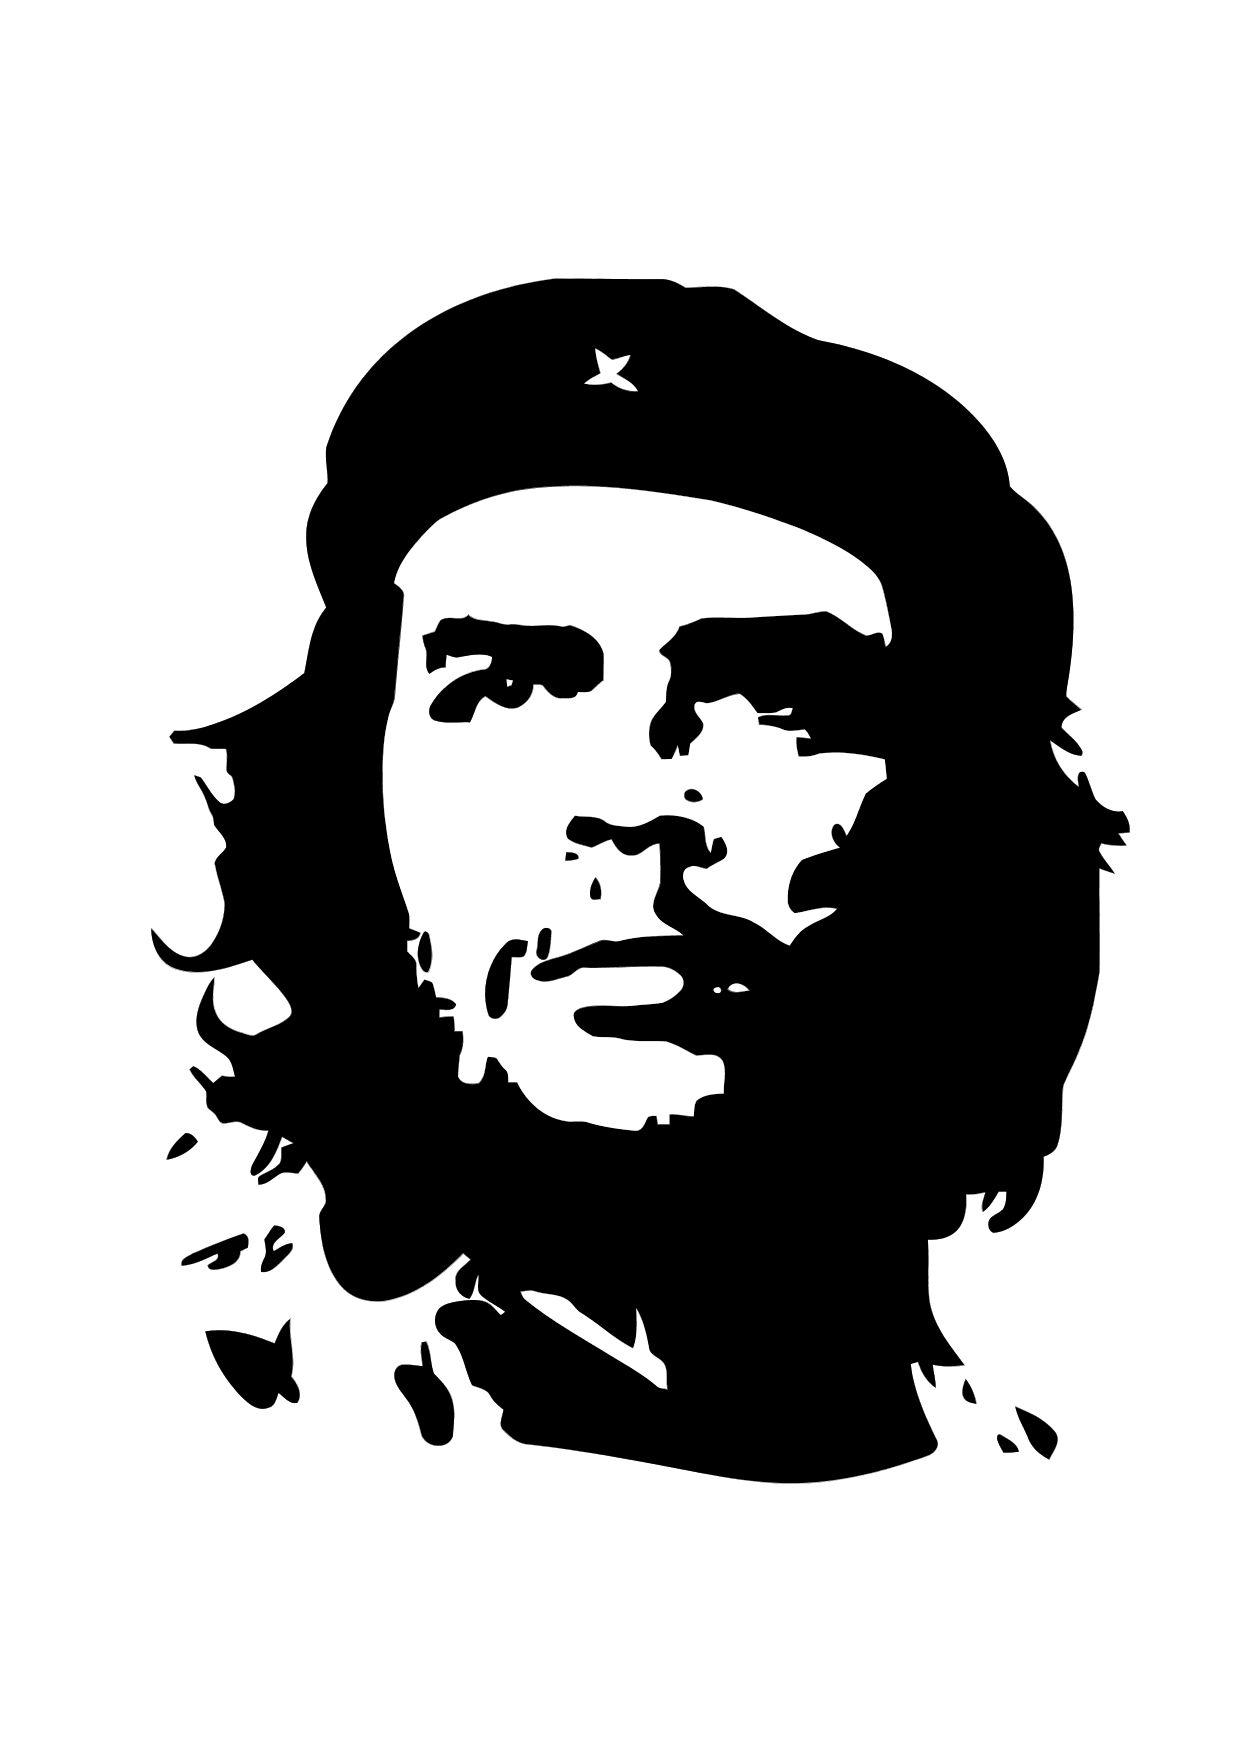 Coloring page Che Guevara